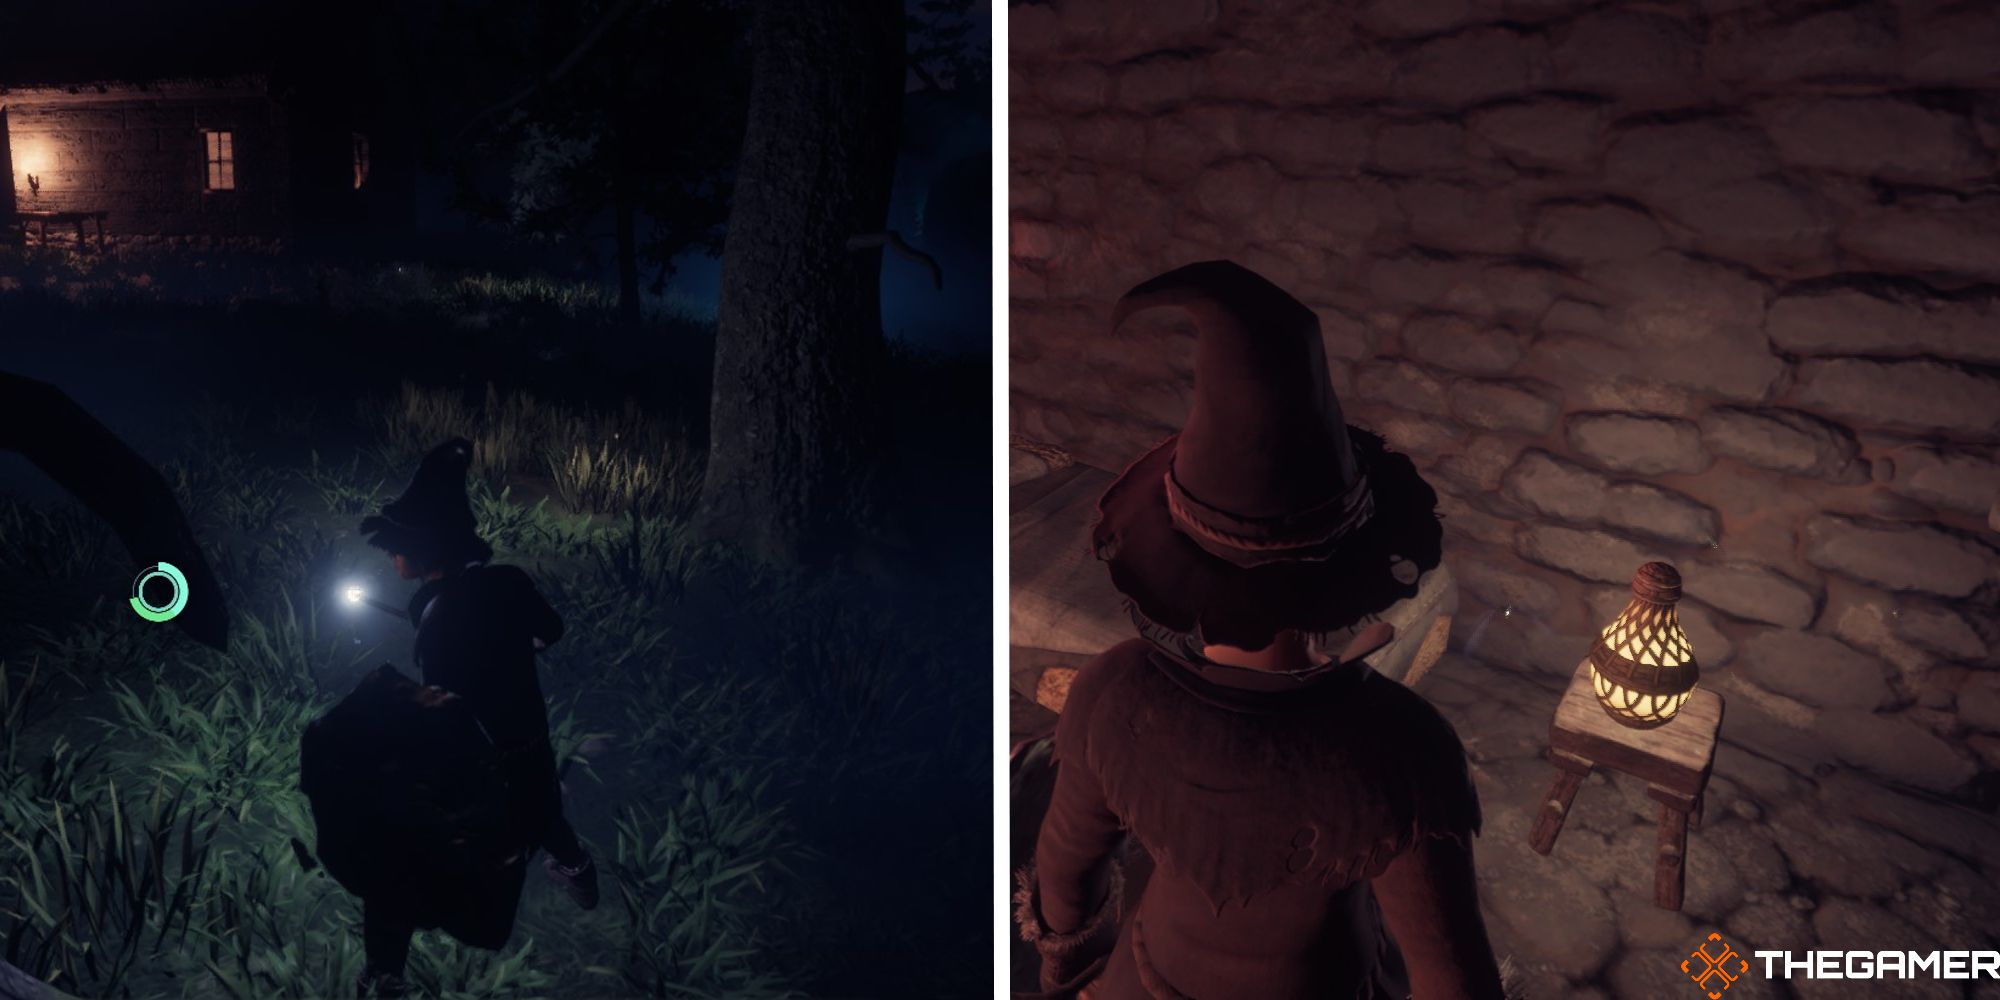 enshrouded split image showing player near fireflies next to image of player next to firefly lamp